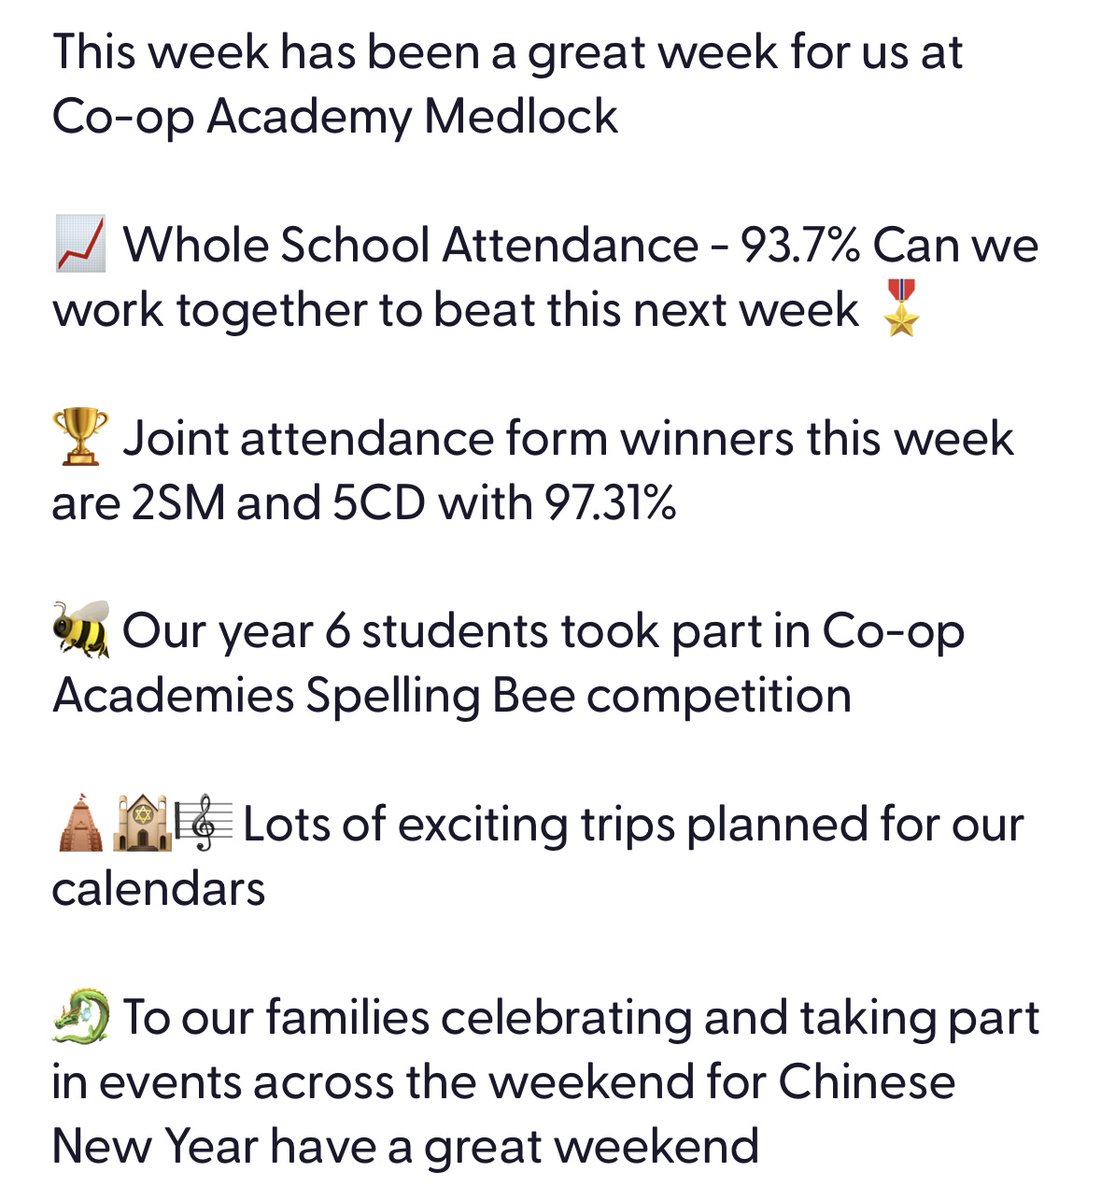 Great week for us at Co-op Academy Medlock
#Succeedtogether